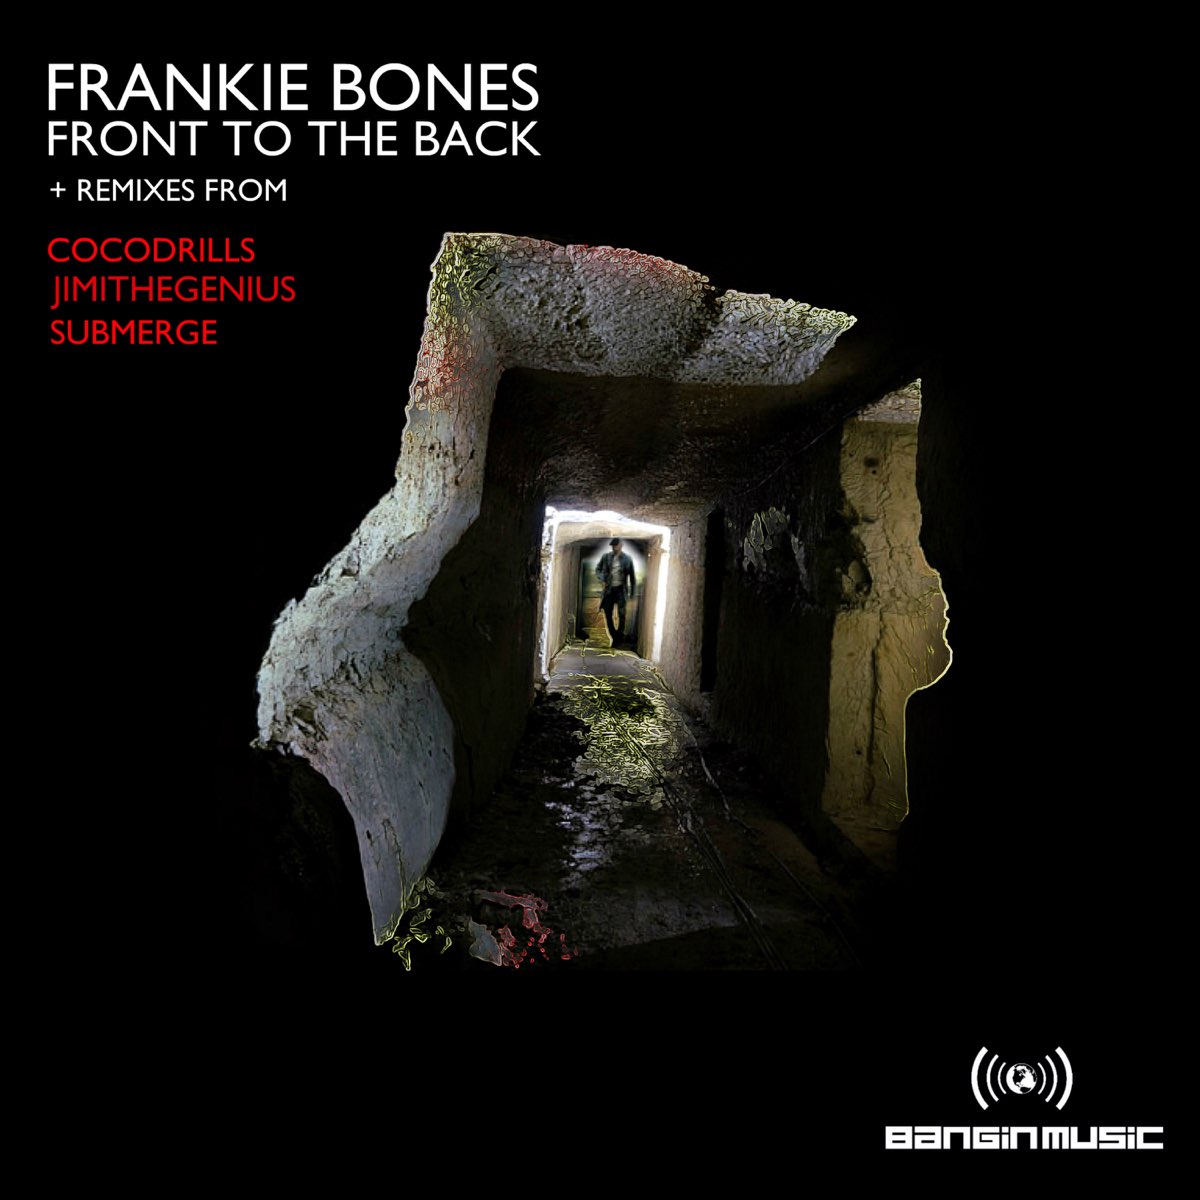 Frankie Bones. Jt music to the bone